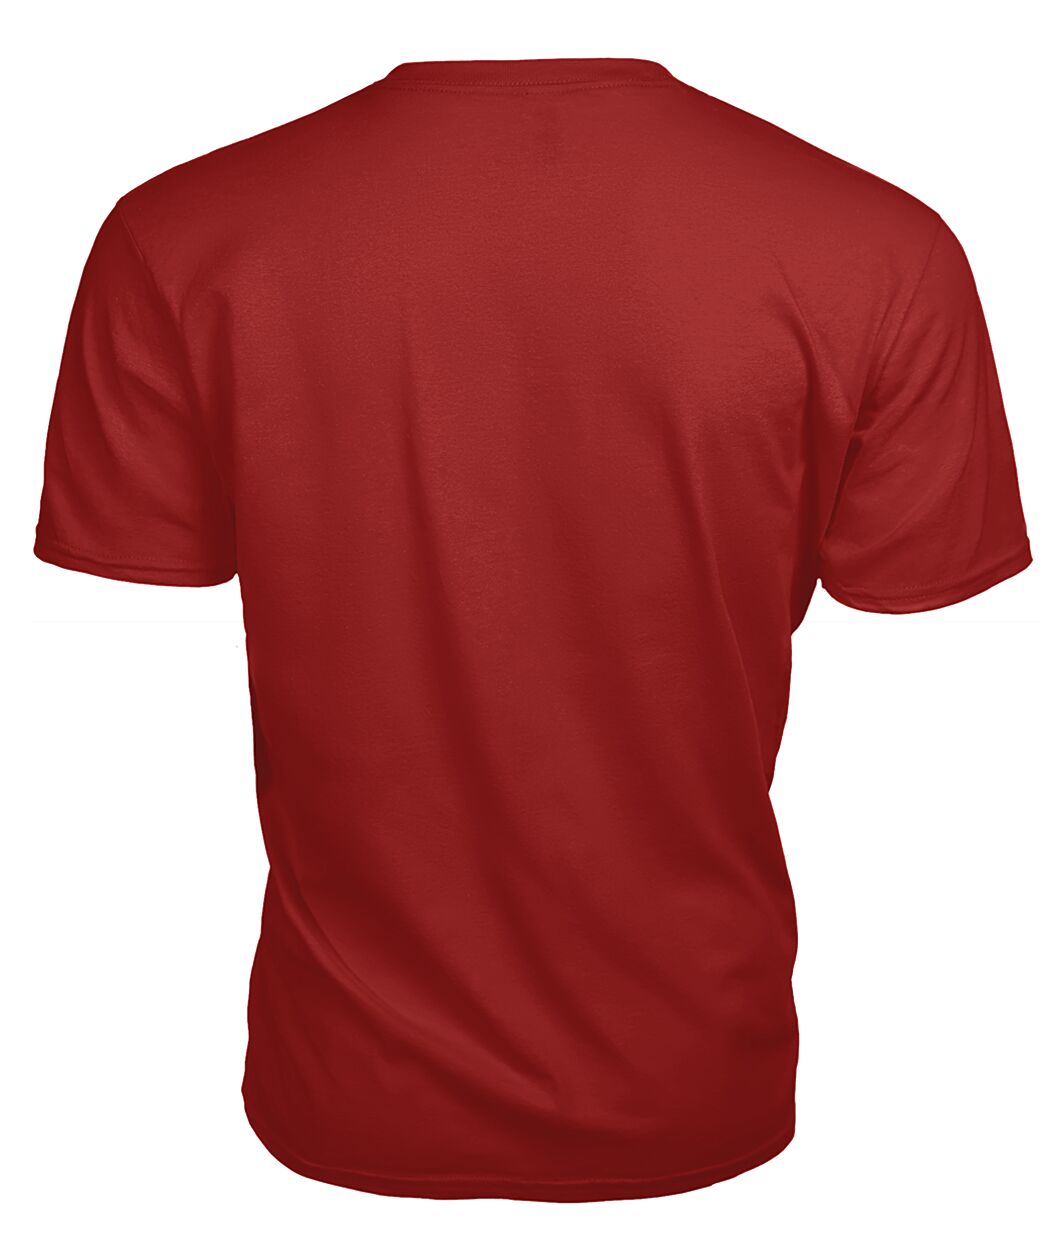 McIntosh Family Tartan - 2D T-shirt